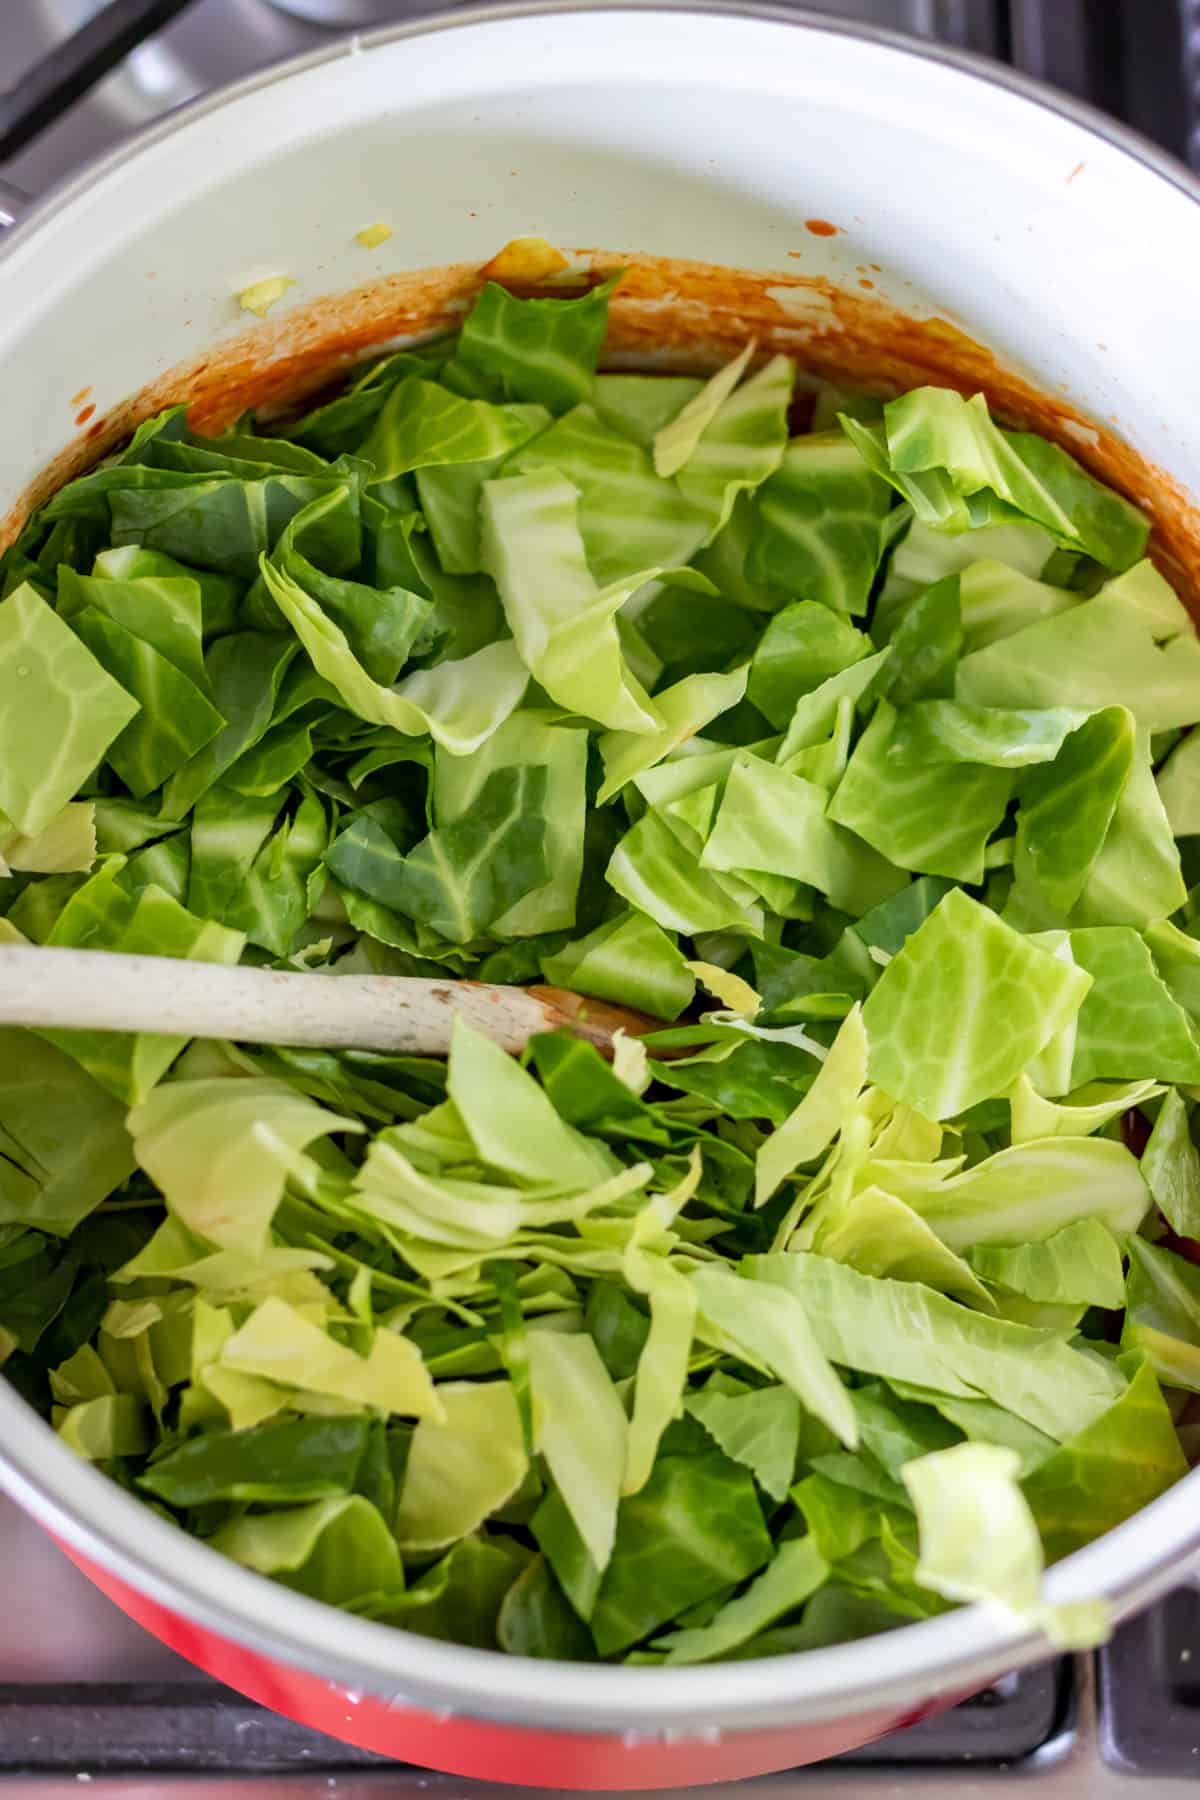 Adding chopped cabbage.